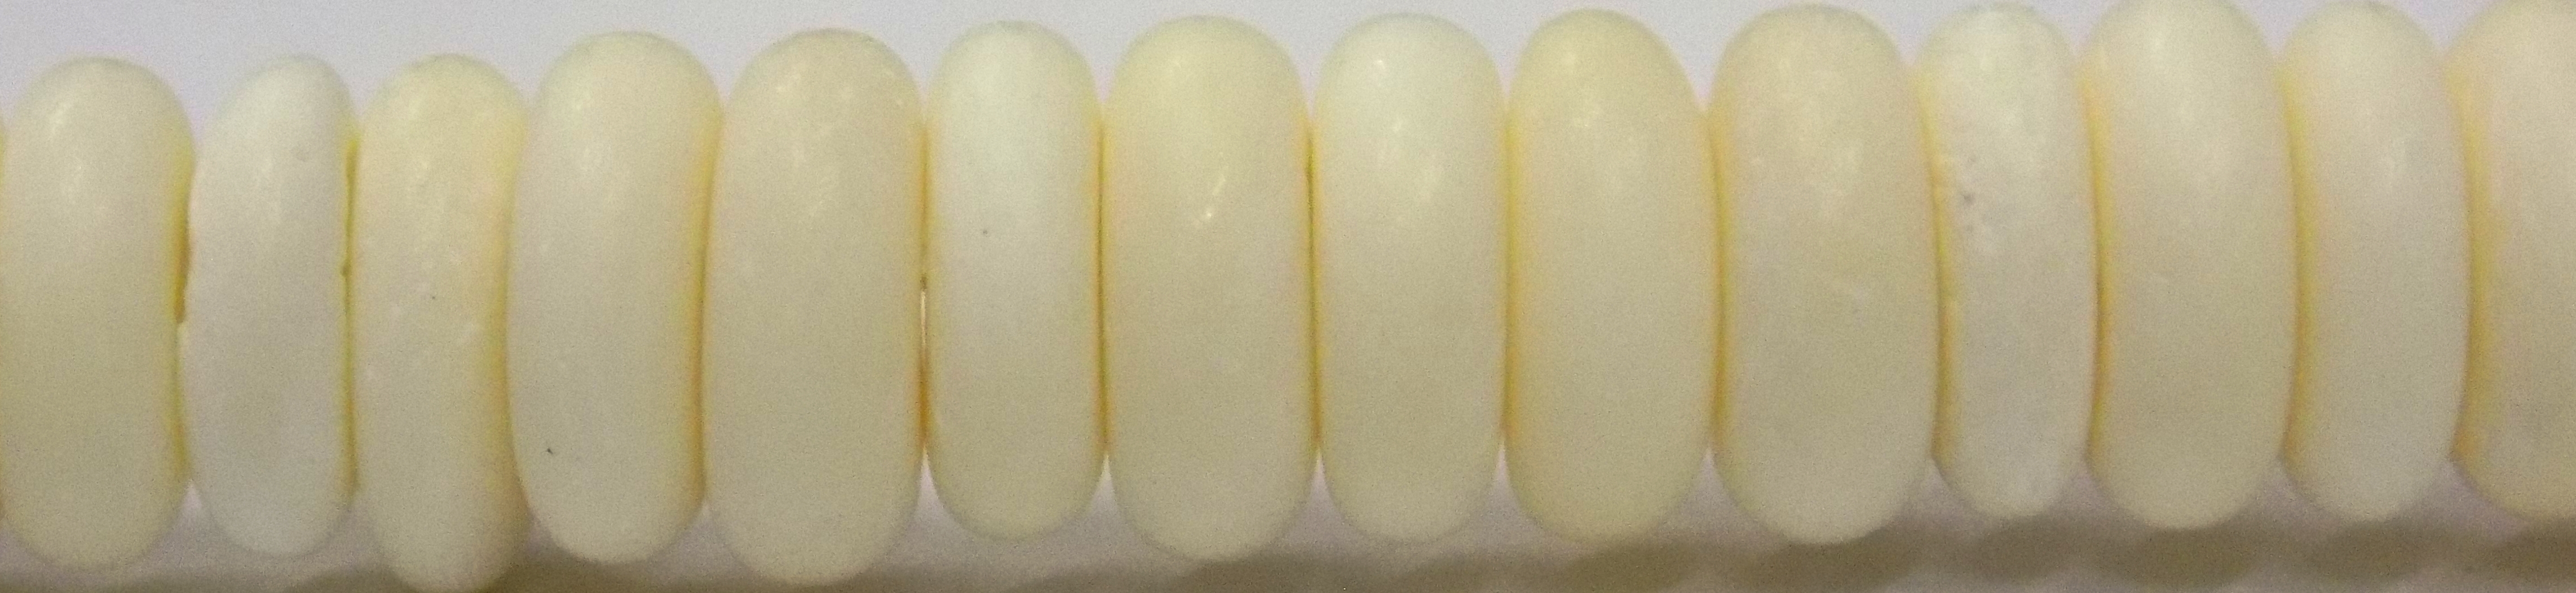 Pukalet White Bone Beads 6.5mmx2mm